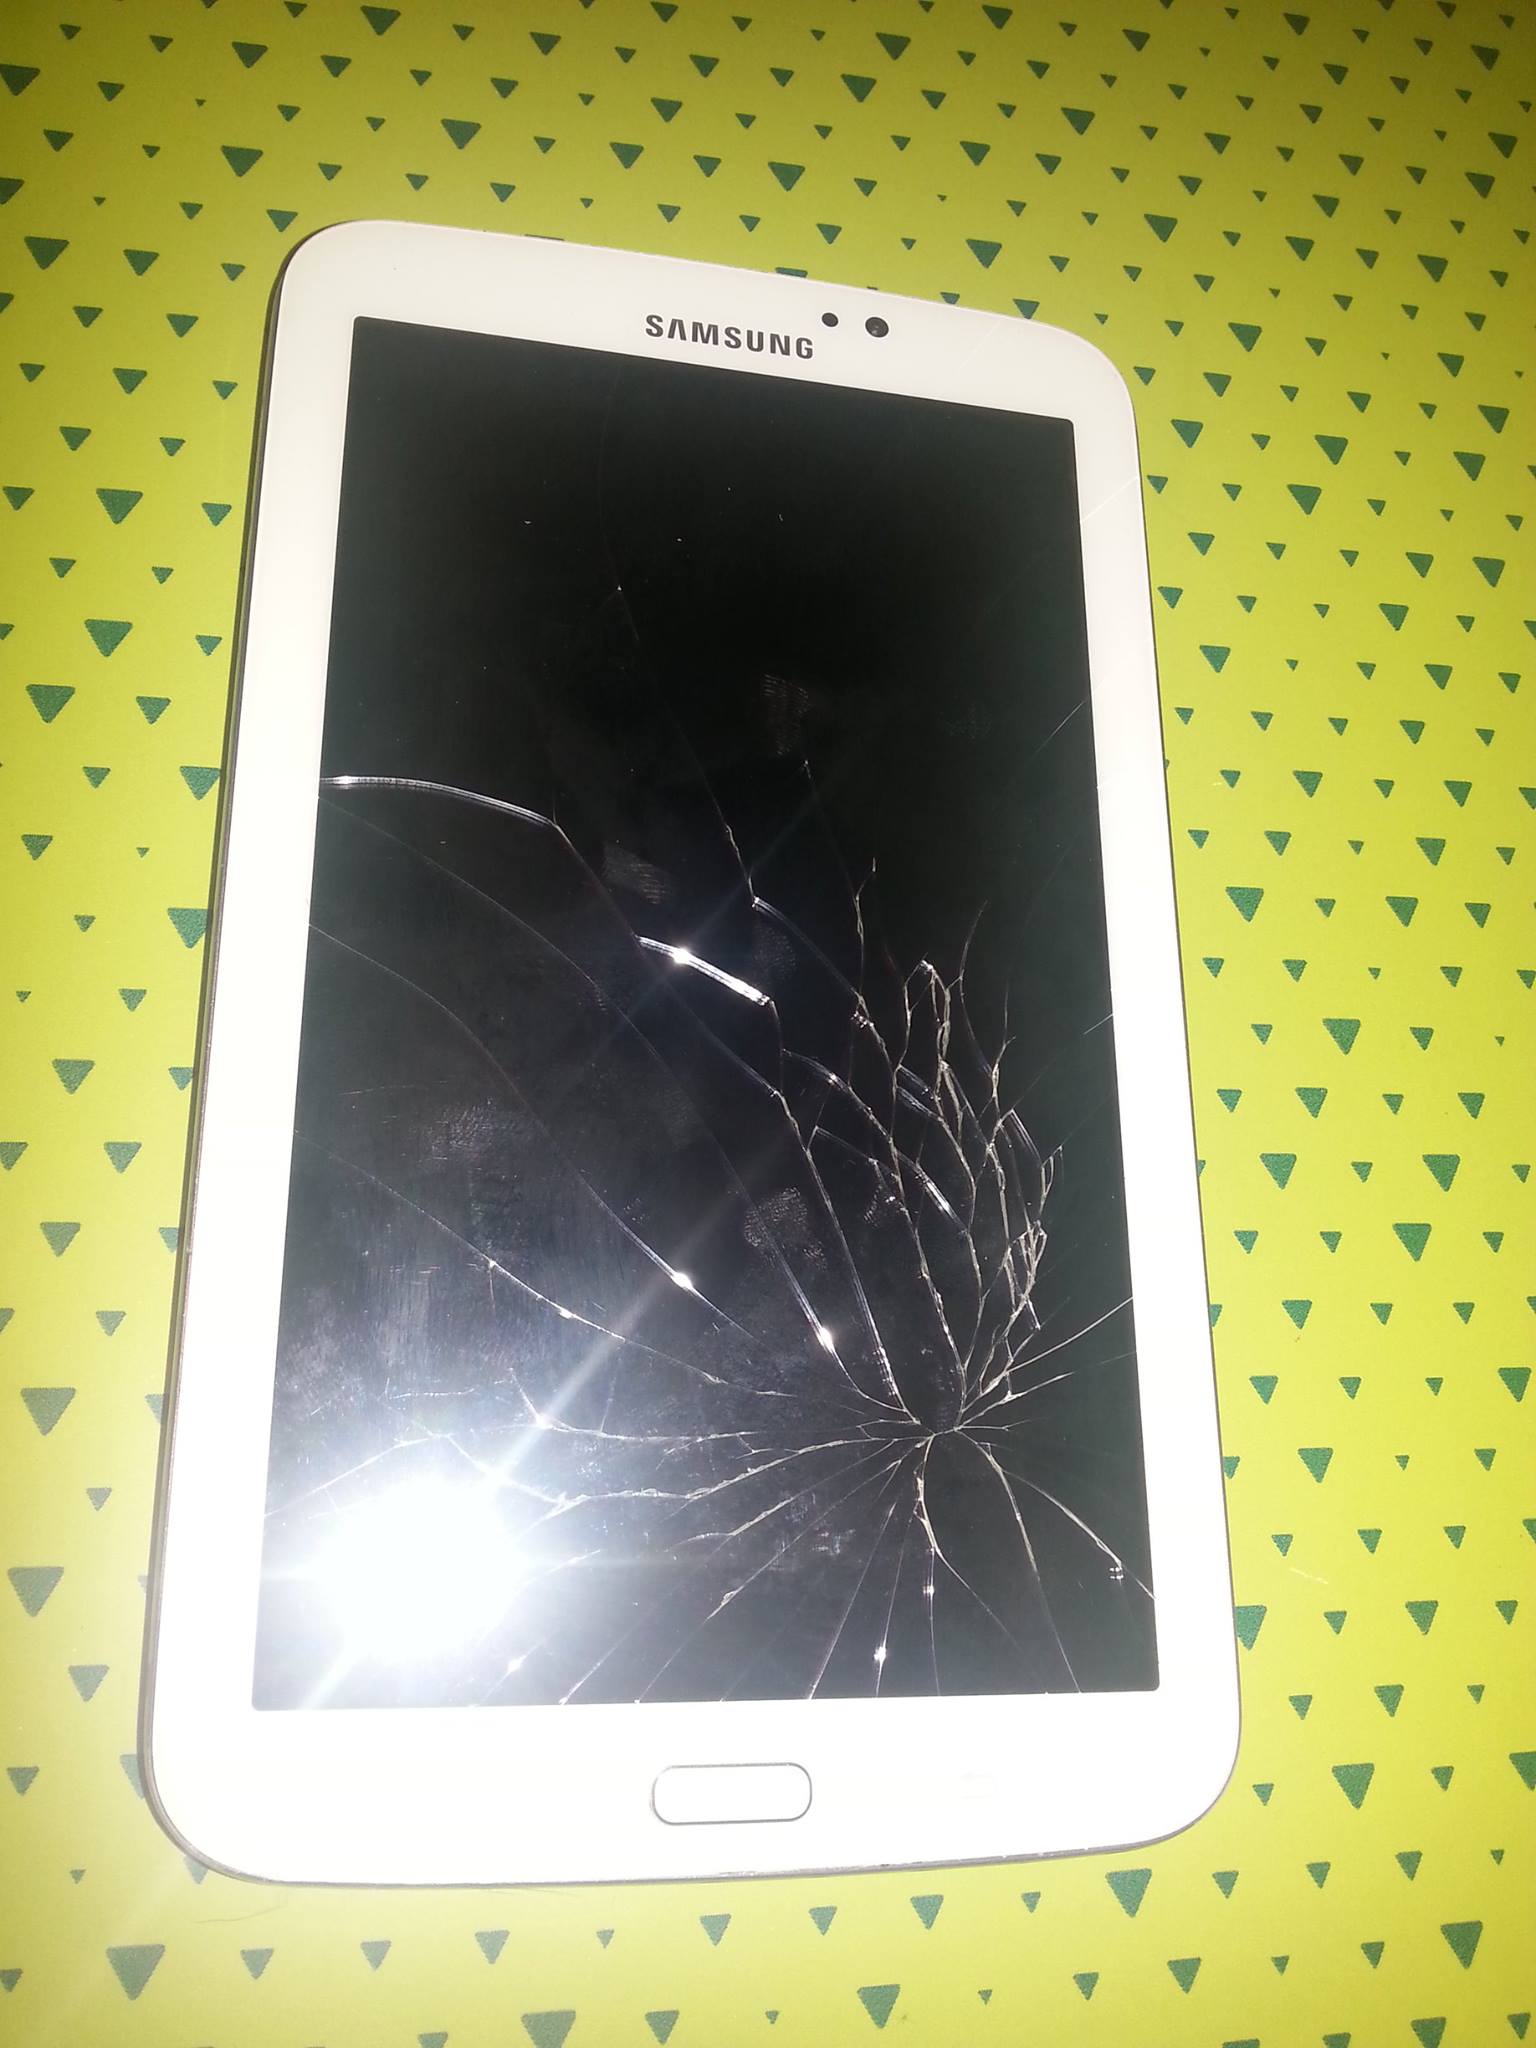 Réparation d'une Samsung Galaxy Tab 3 7